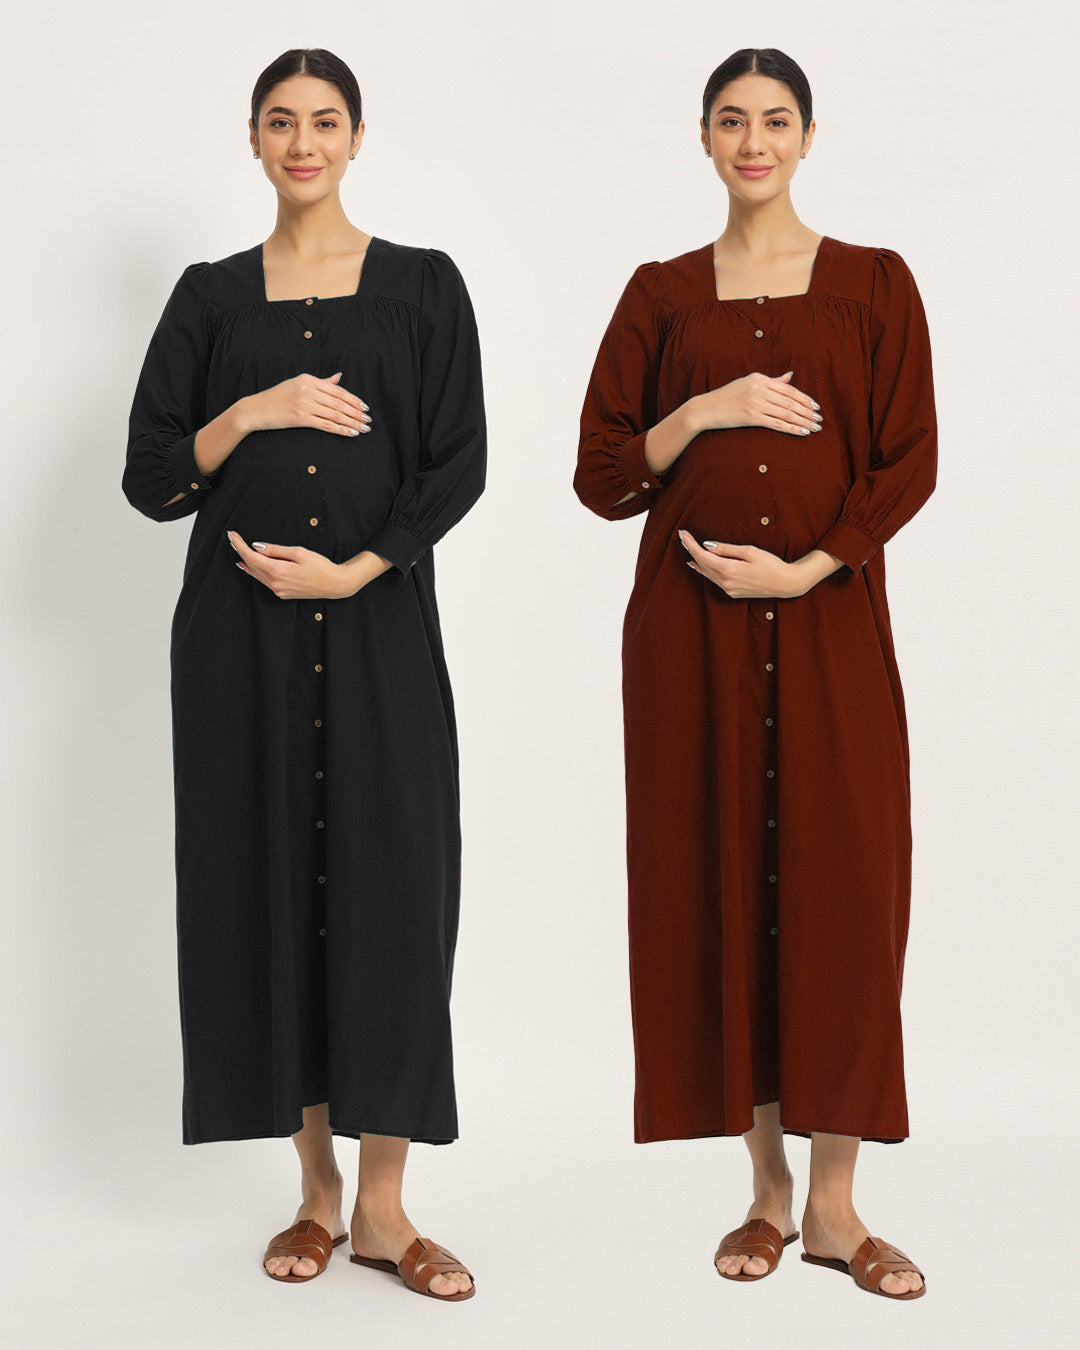 Combo: Black & Russet Red Belly Blossom Maternity & Nursing Dress-Set of 2